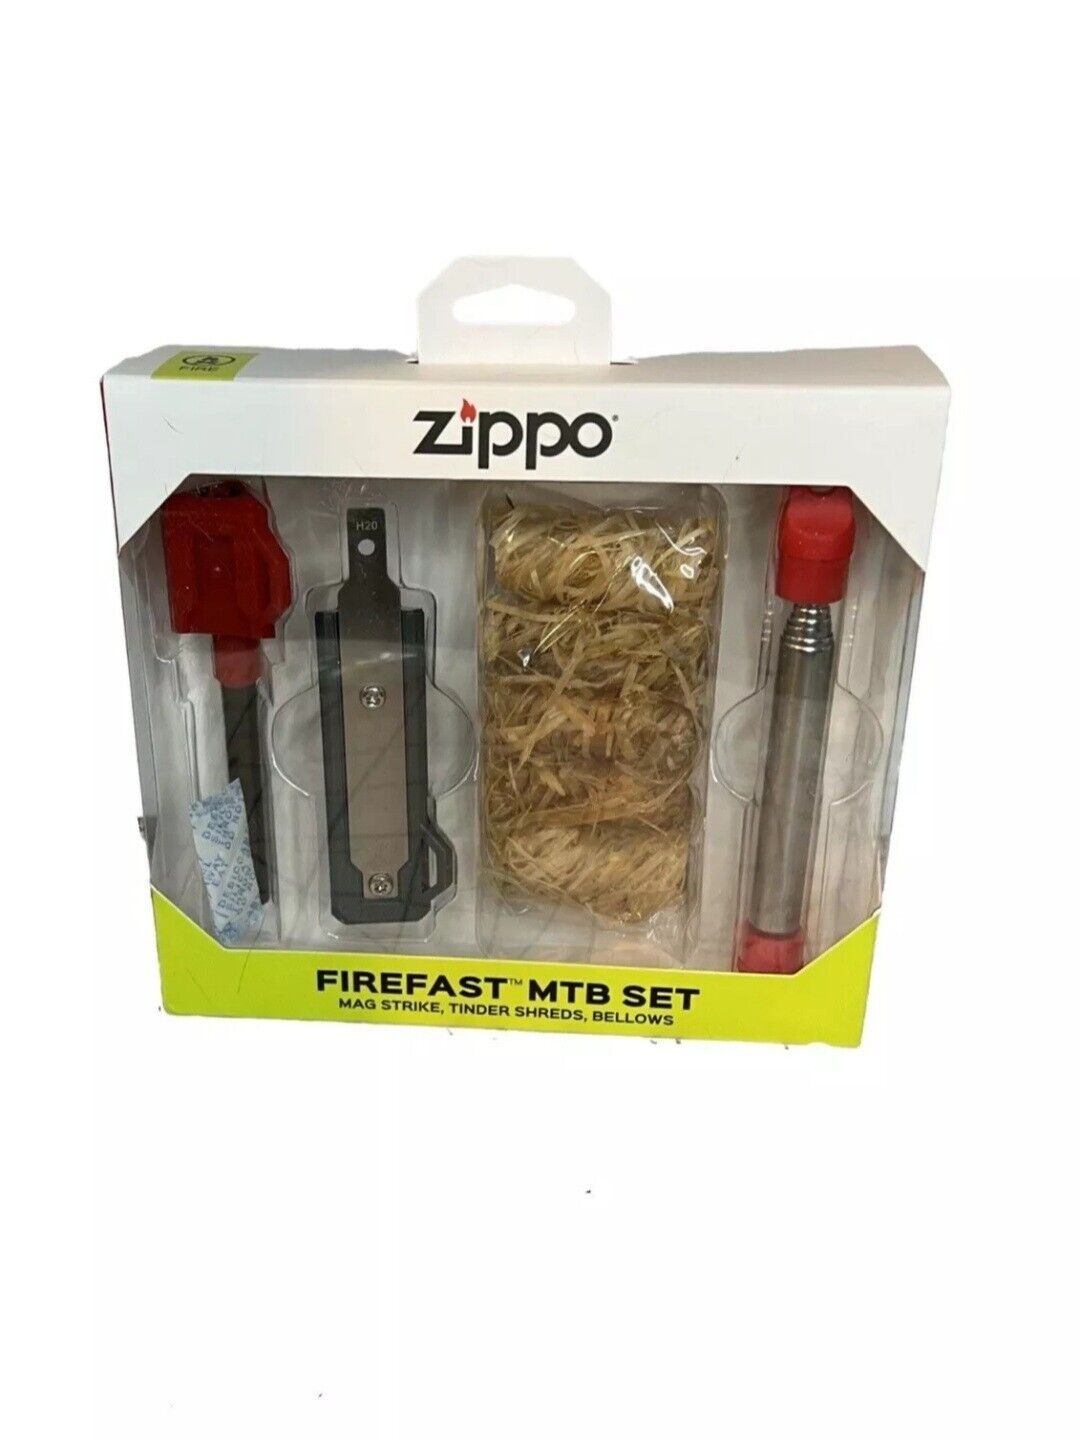 ZIPPO Firefast MTB Set- Includes Mag Strike, Tinder Shreds, Bellows